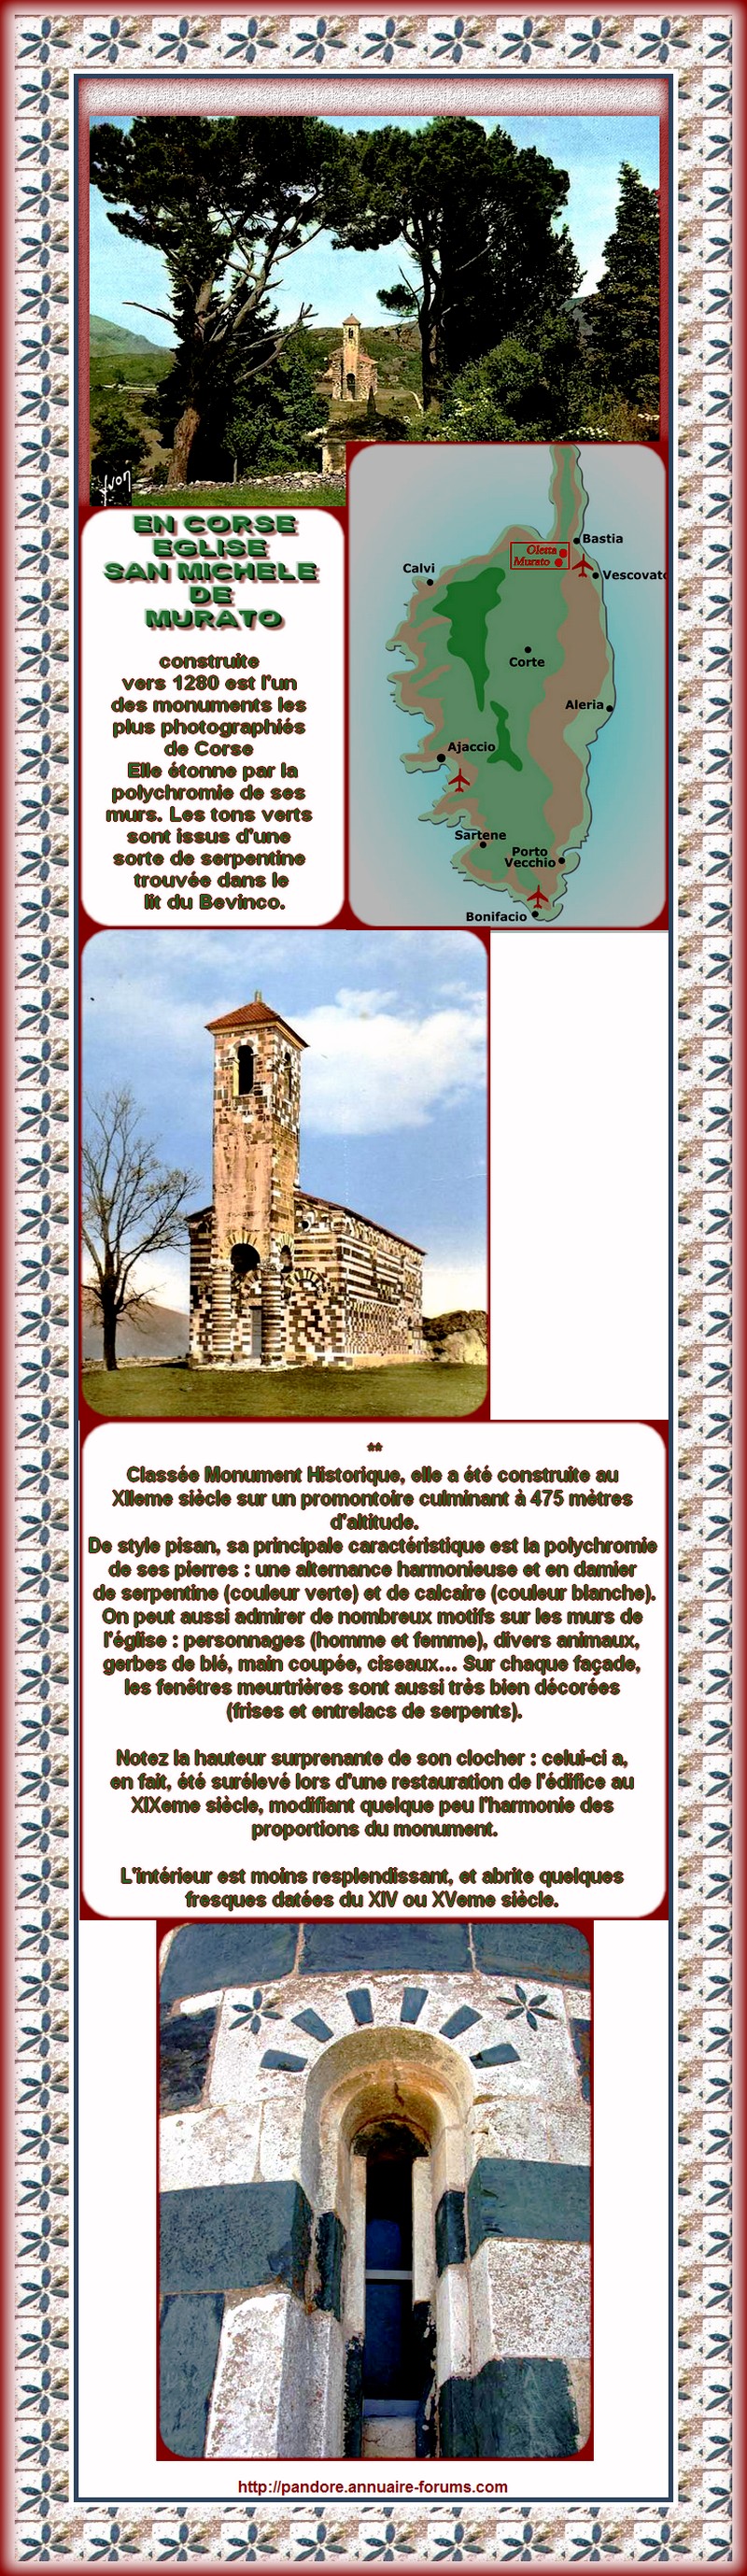 FRANCE - CORSE - EGLISE SAN MICHELE DE MURATO CLASSEE MONUMENT HISTORIQUE  - ART ROMAN 13011811004615723410774140